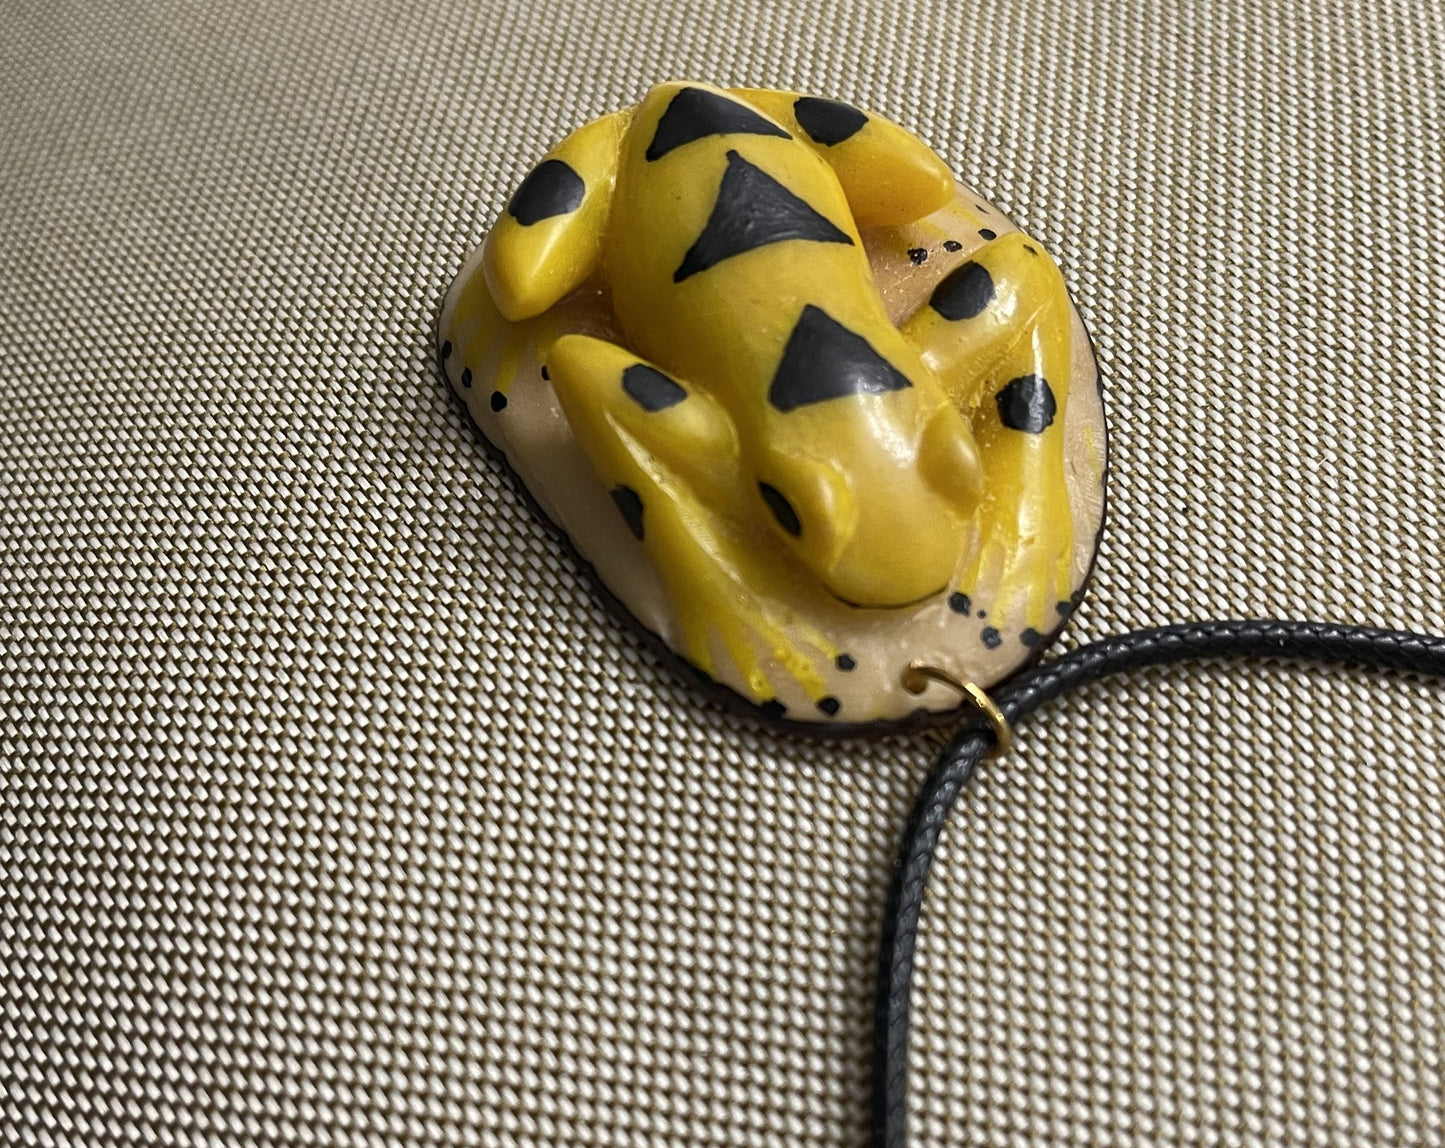 Golden Frog Tagua Necklace Jewelry Pendant Panama